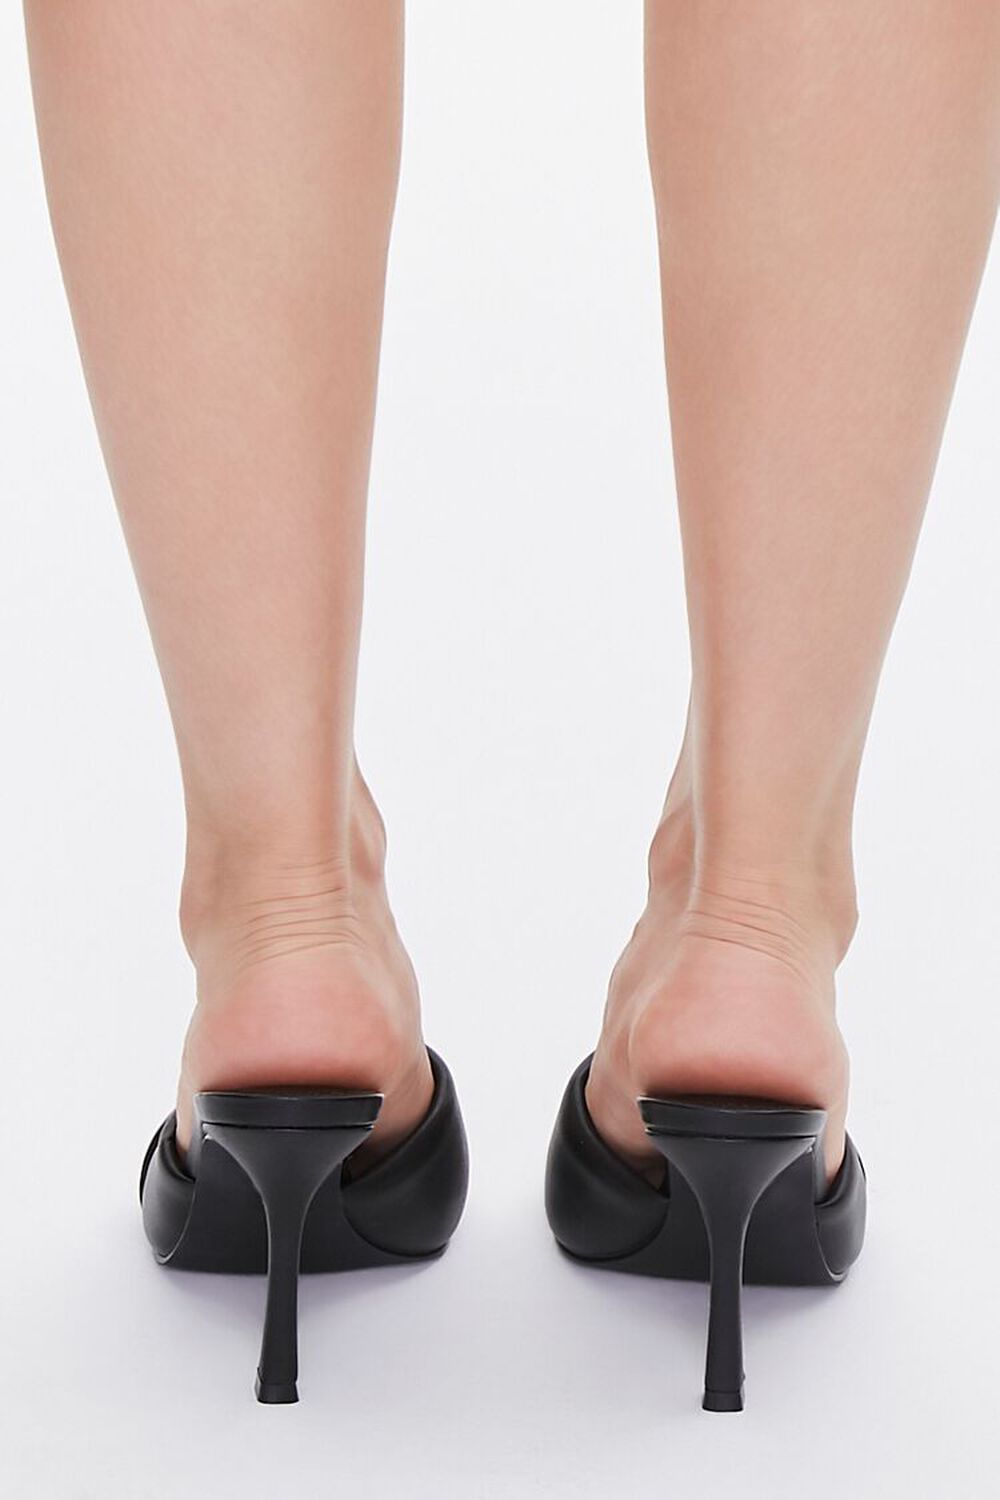 BLACK Square-Toe Stiletto Heels, image 3